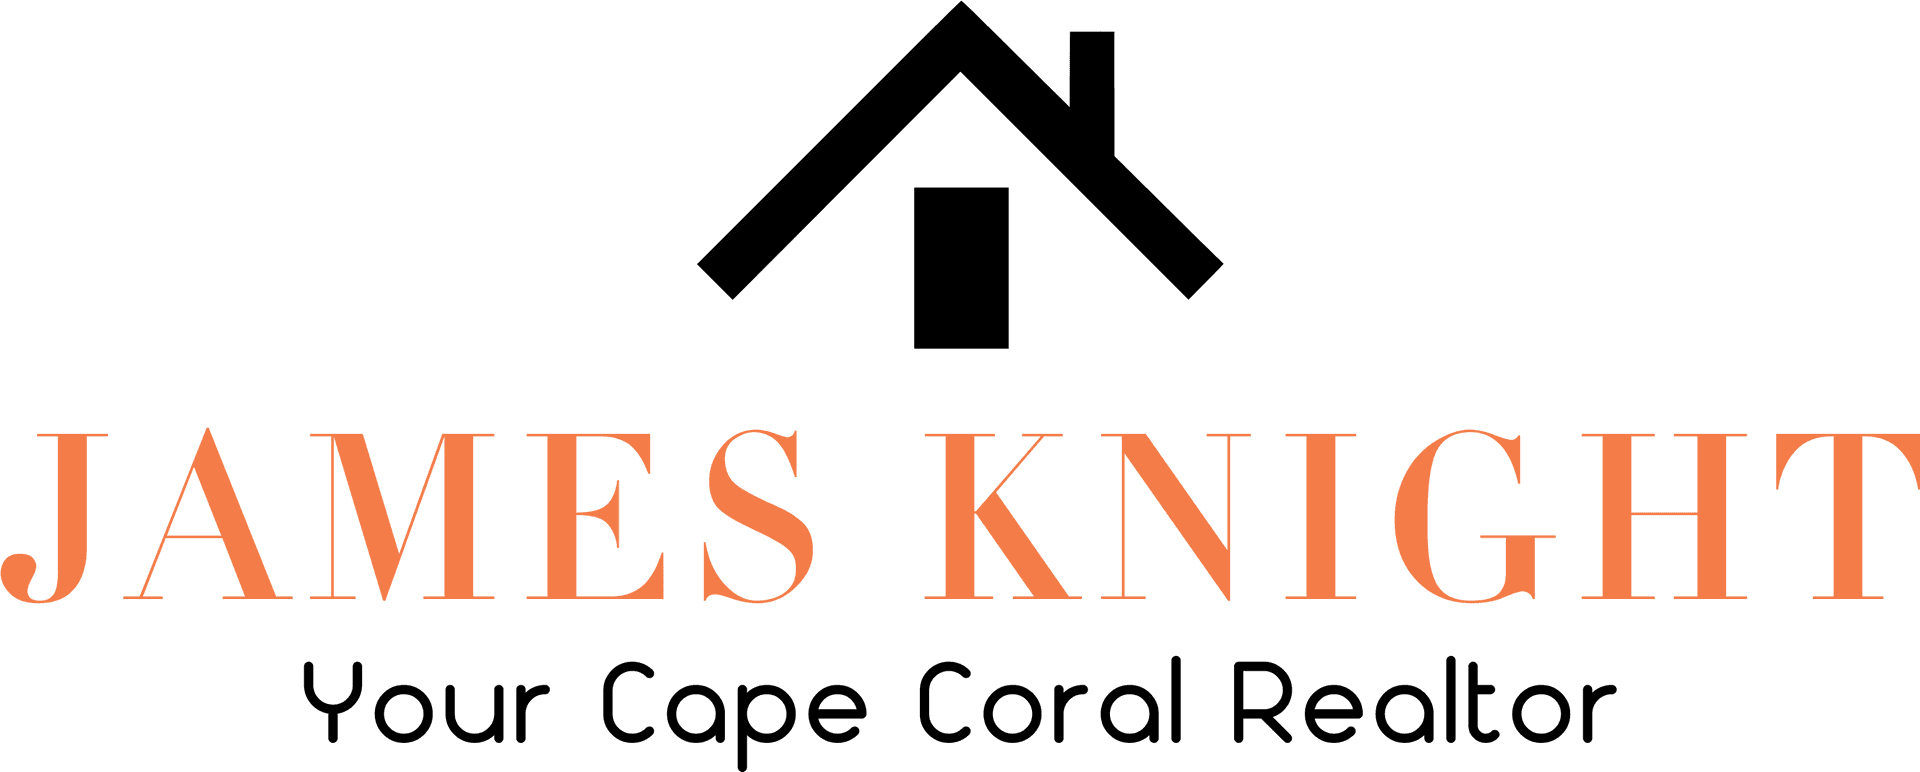 James Knight Cape Coral Realtor Logo PNG